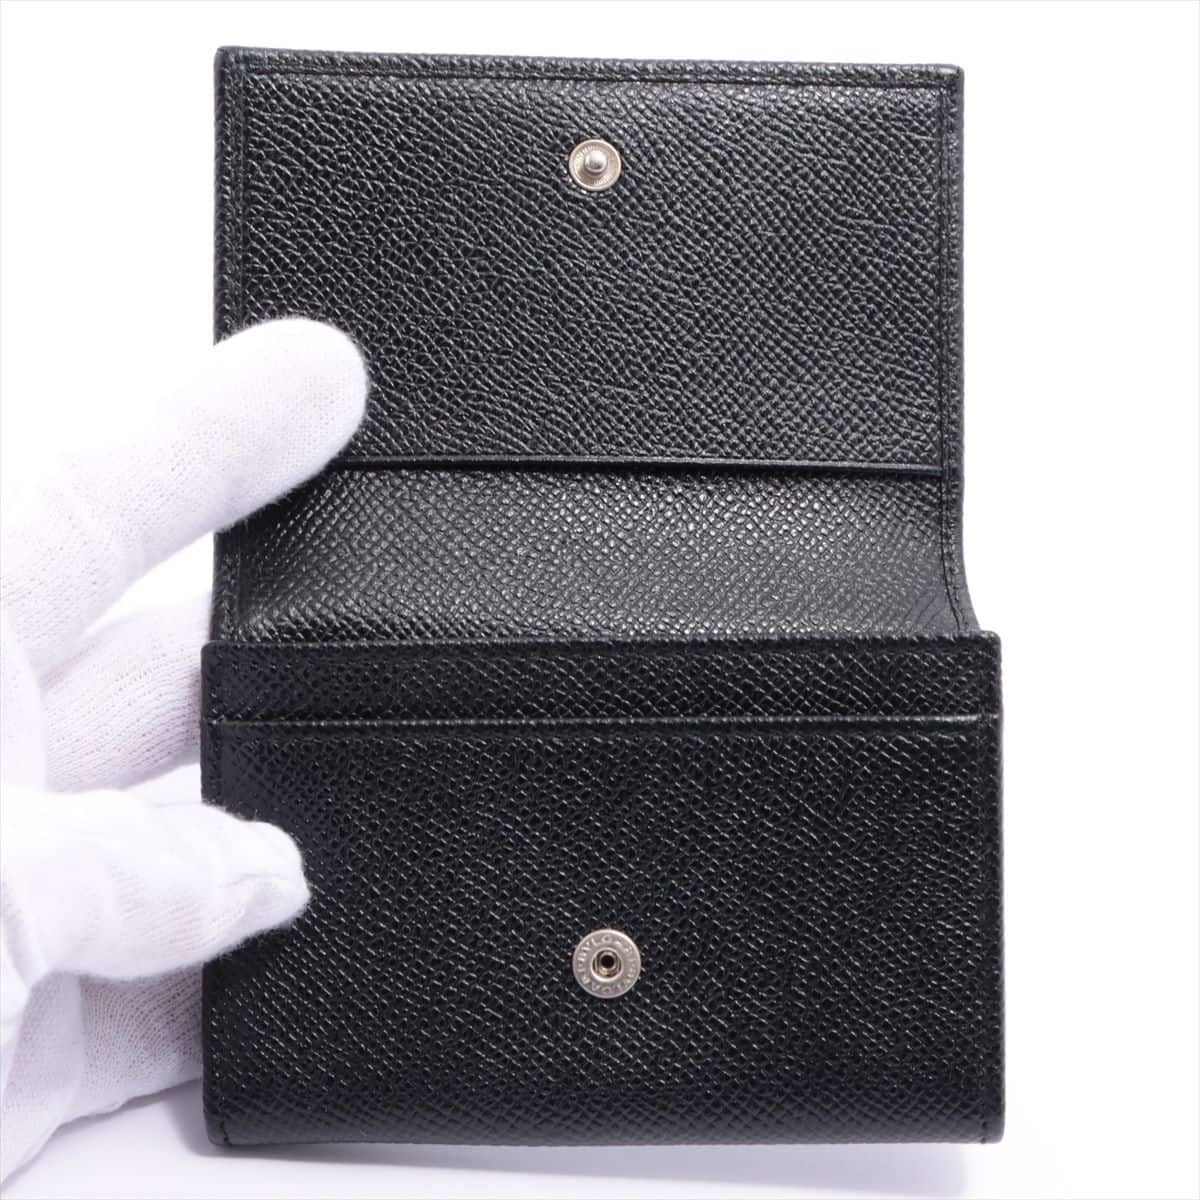 Bvlgari Bvlgari Bvlgari Leather Card case Black